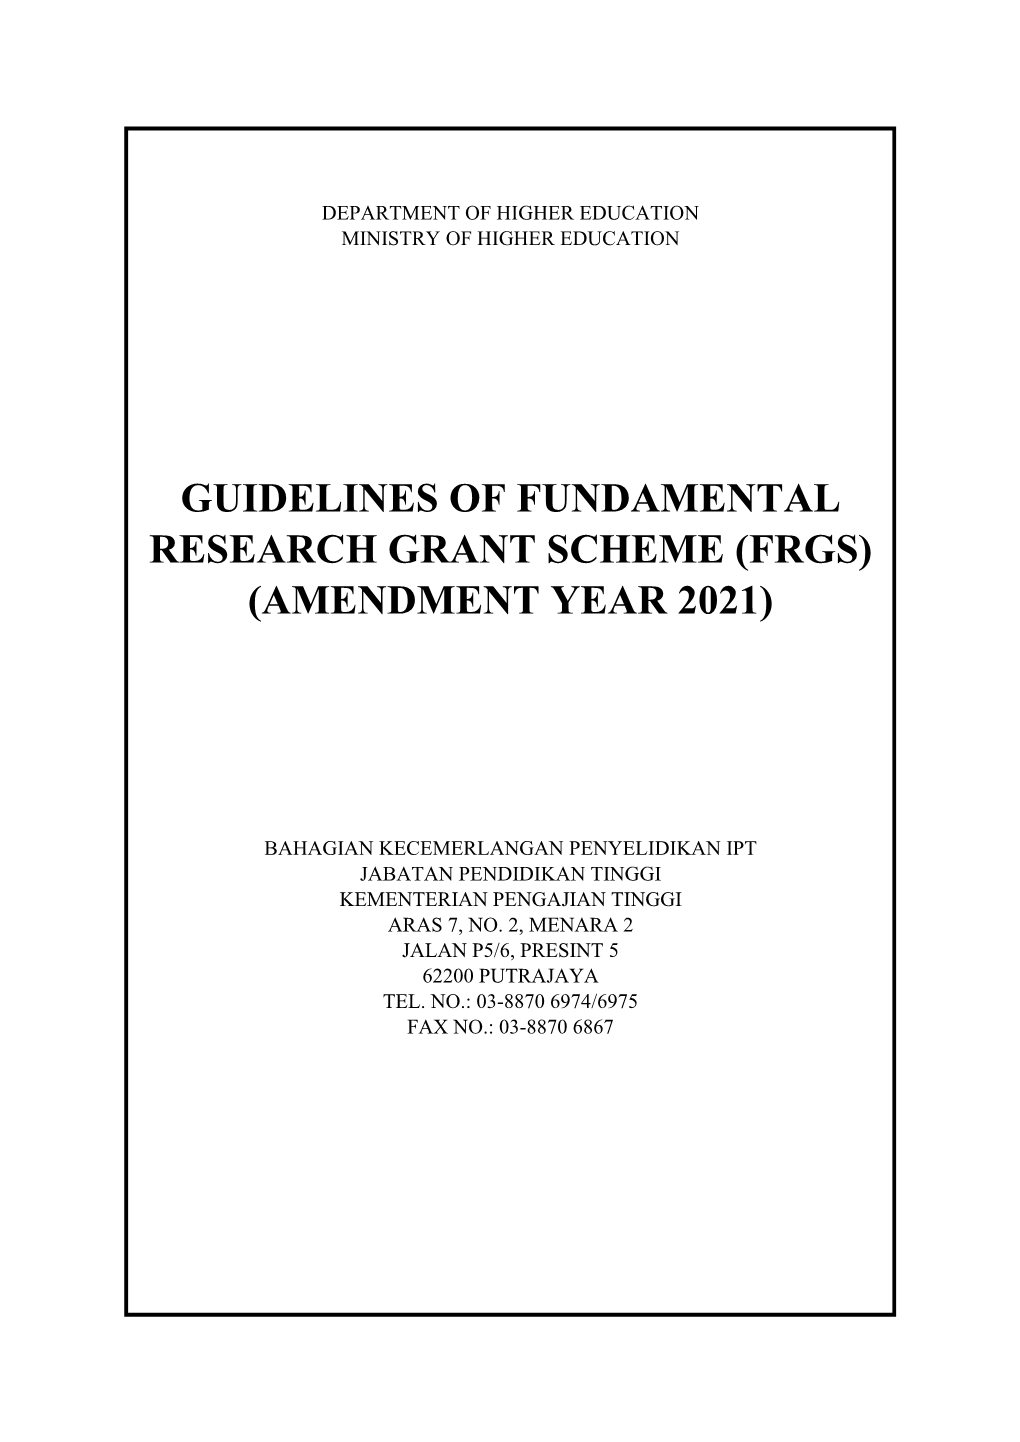 Guidelines of Fundamental Research Grant Scheme (Frgs) (Amendment Year 2021)